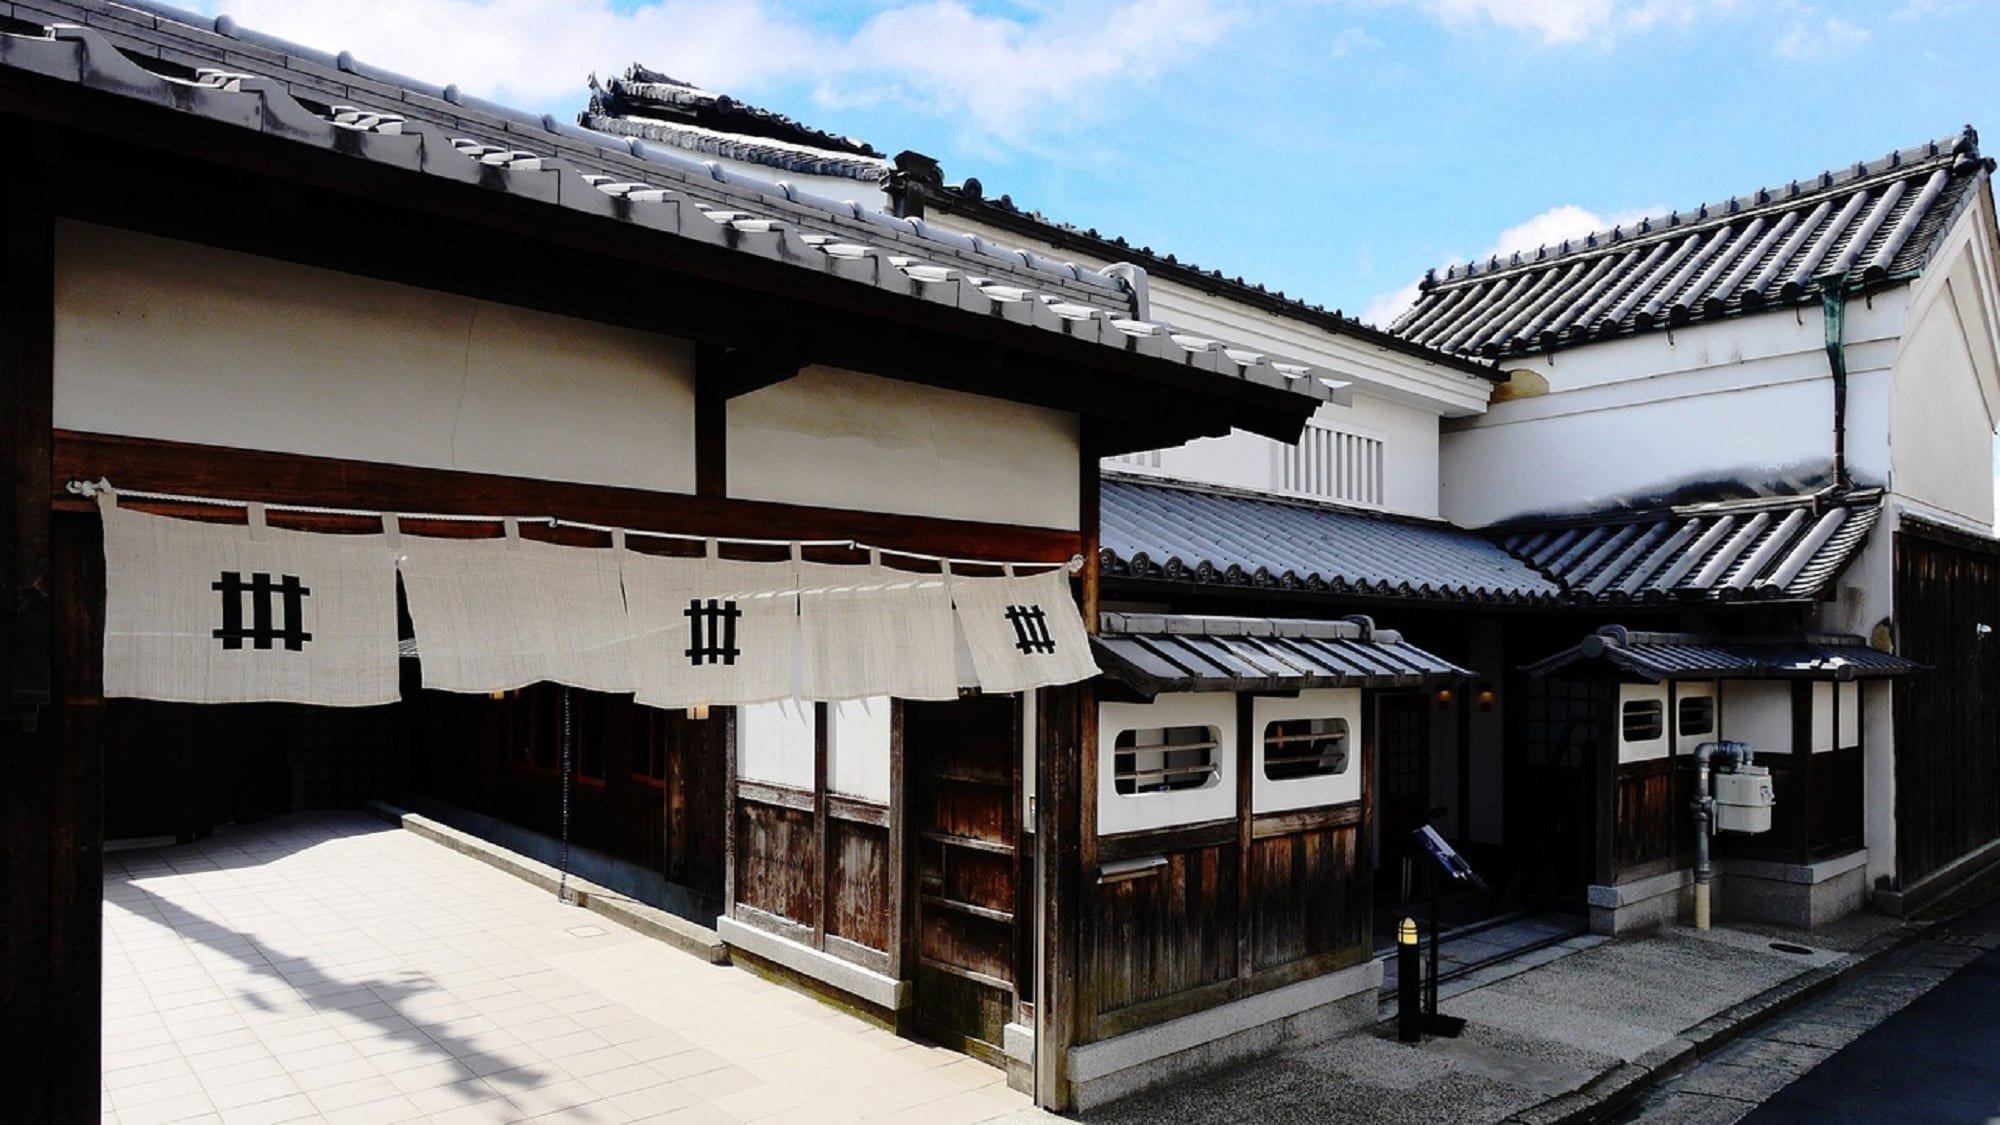 HOTEL NIPPONIA Nara Naramachi adalah penginapan yang menghidupkan kembali bekas tempat pembuatan bir sake dari tempat pembuatan bir yang didirikan pada tahun pertama era Meiji.